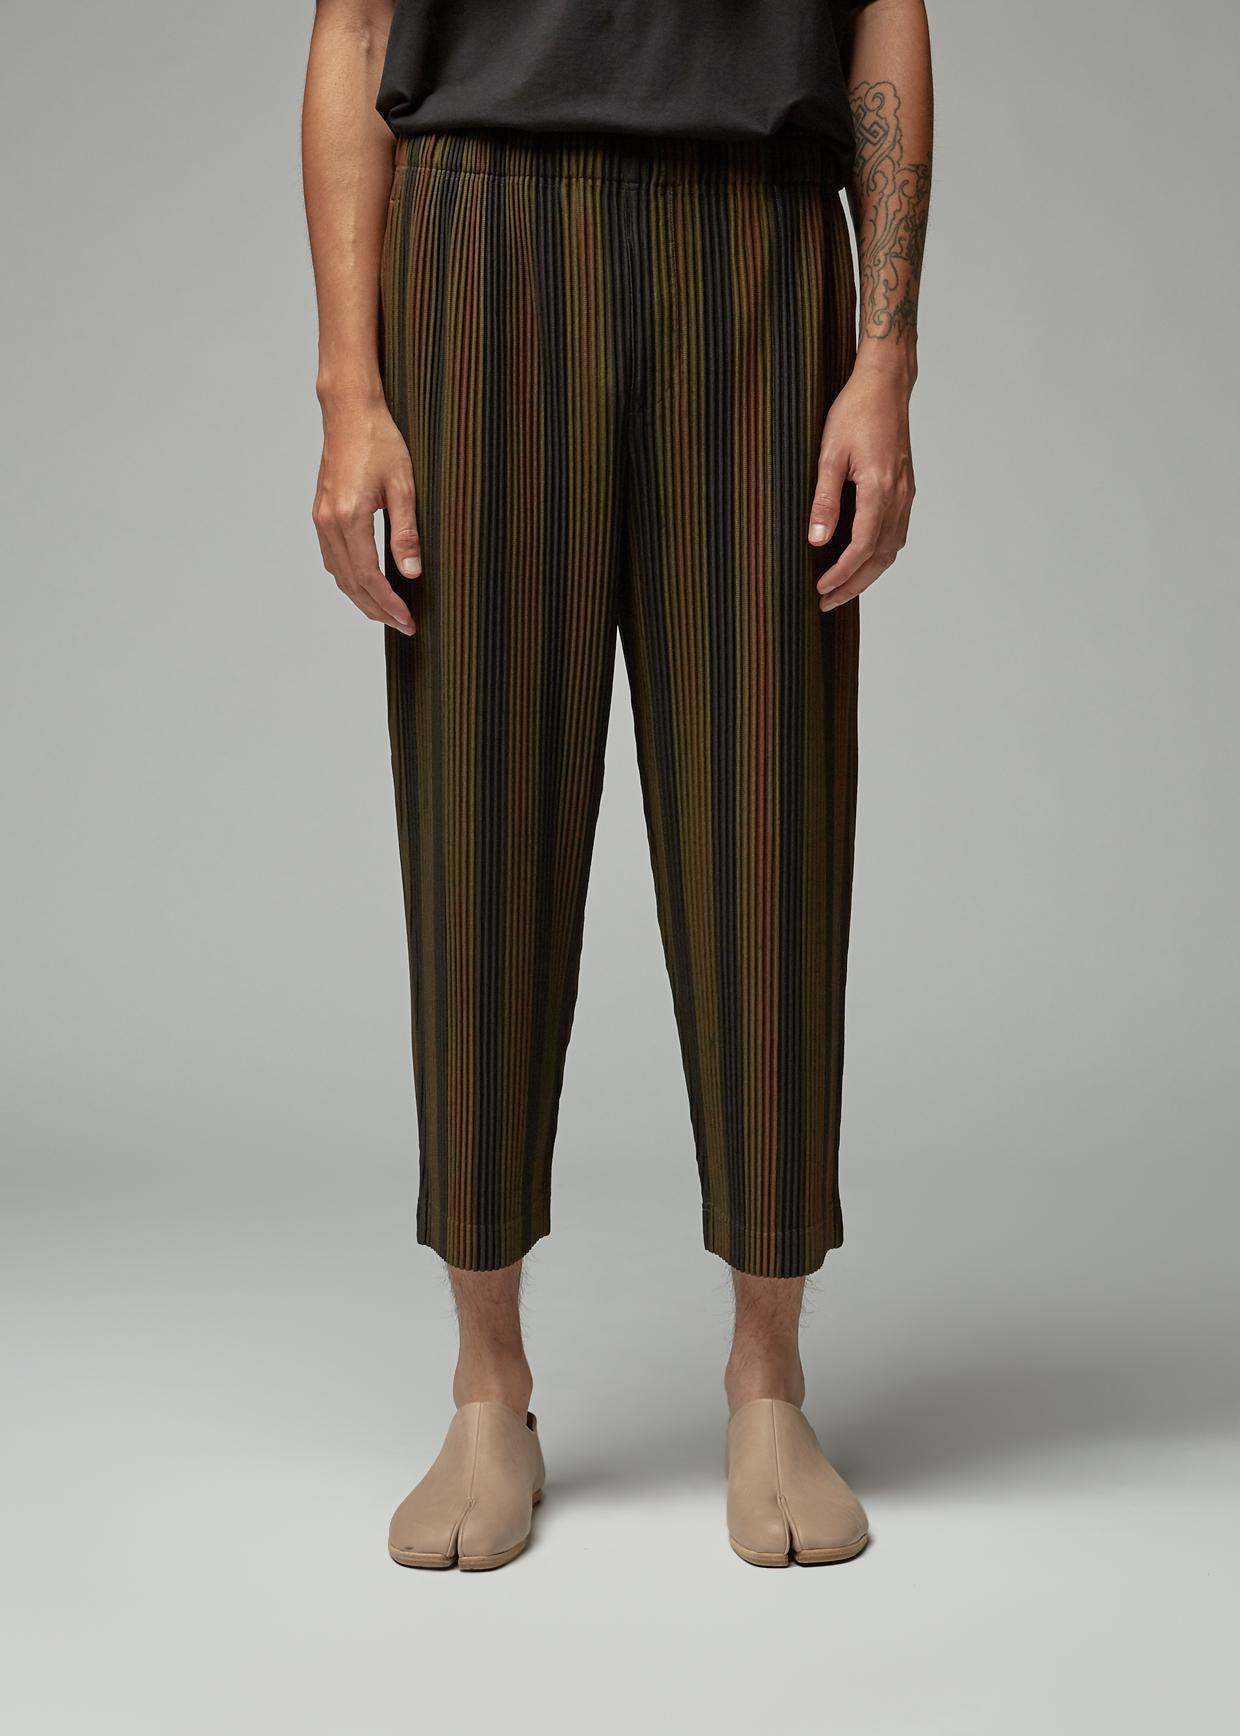 Homme Plissé Issey Miyake Synthetic Stripe Pant in Brown Stripe (Brown